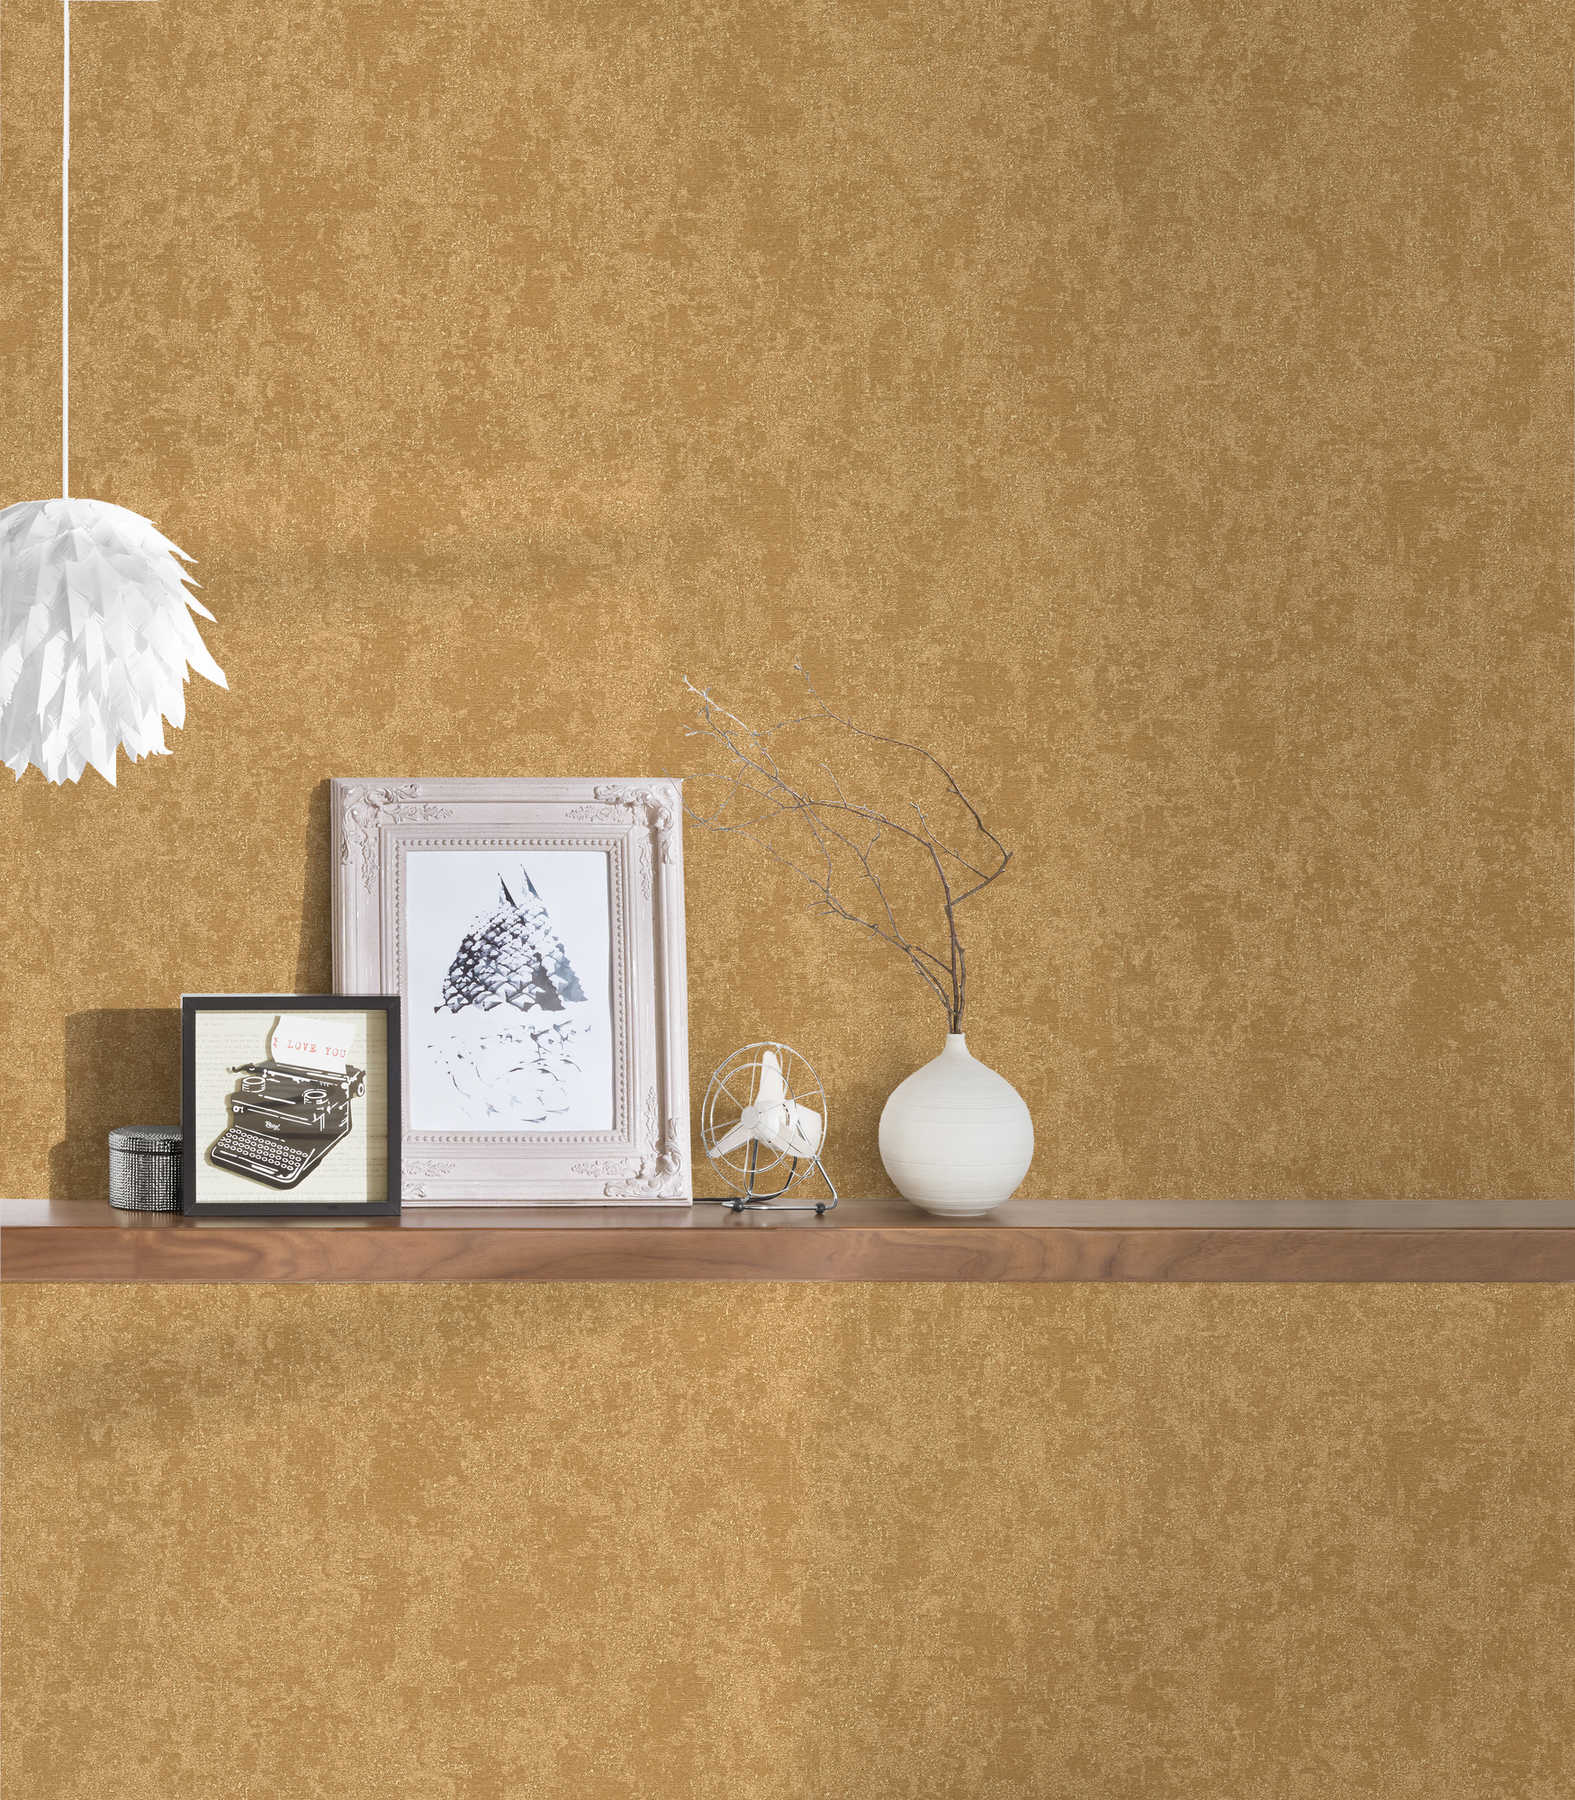             VERSACE wallpaper gold colour & vintage texture - metallic
        